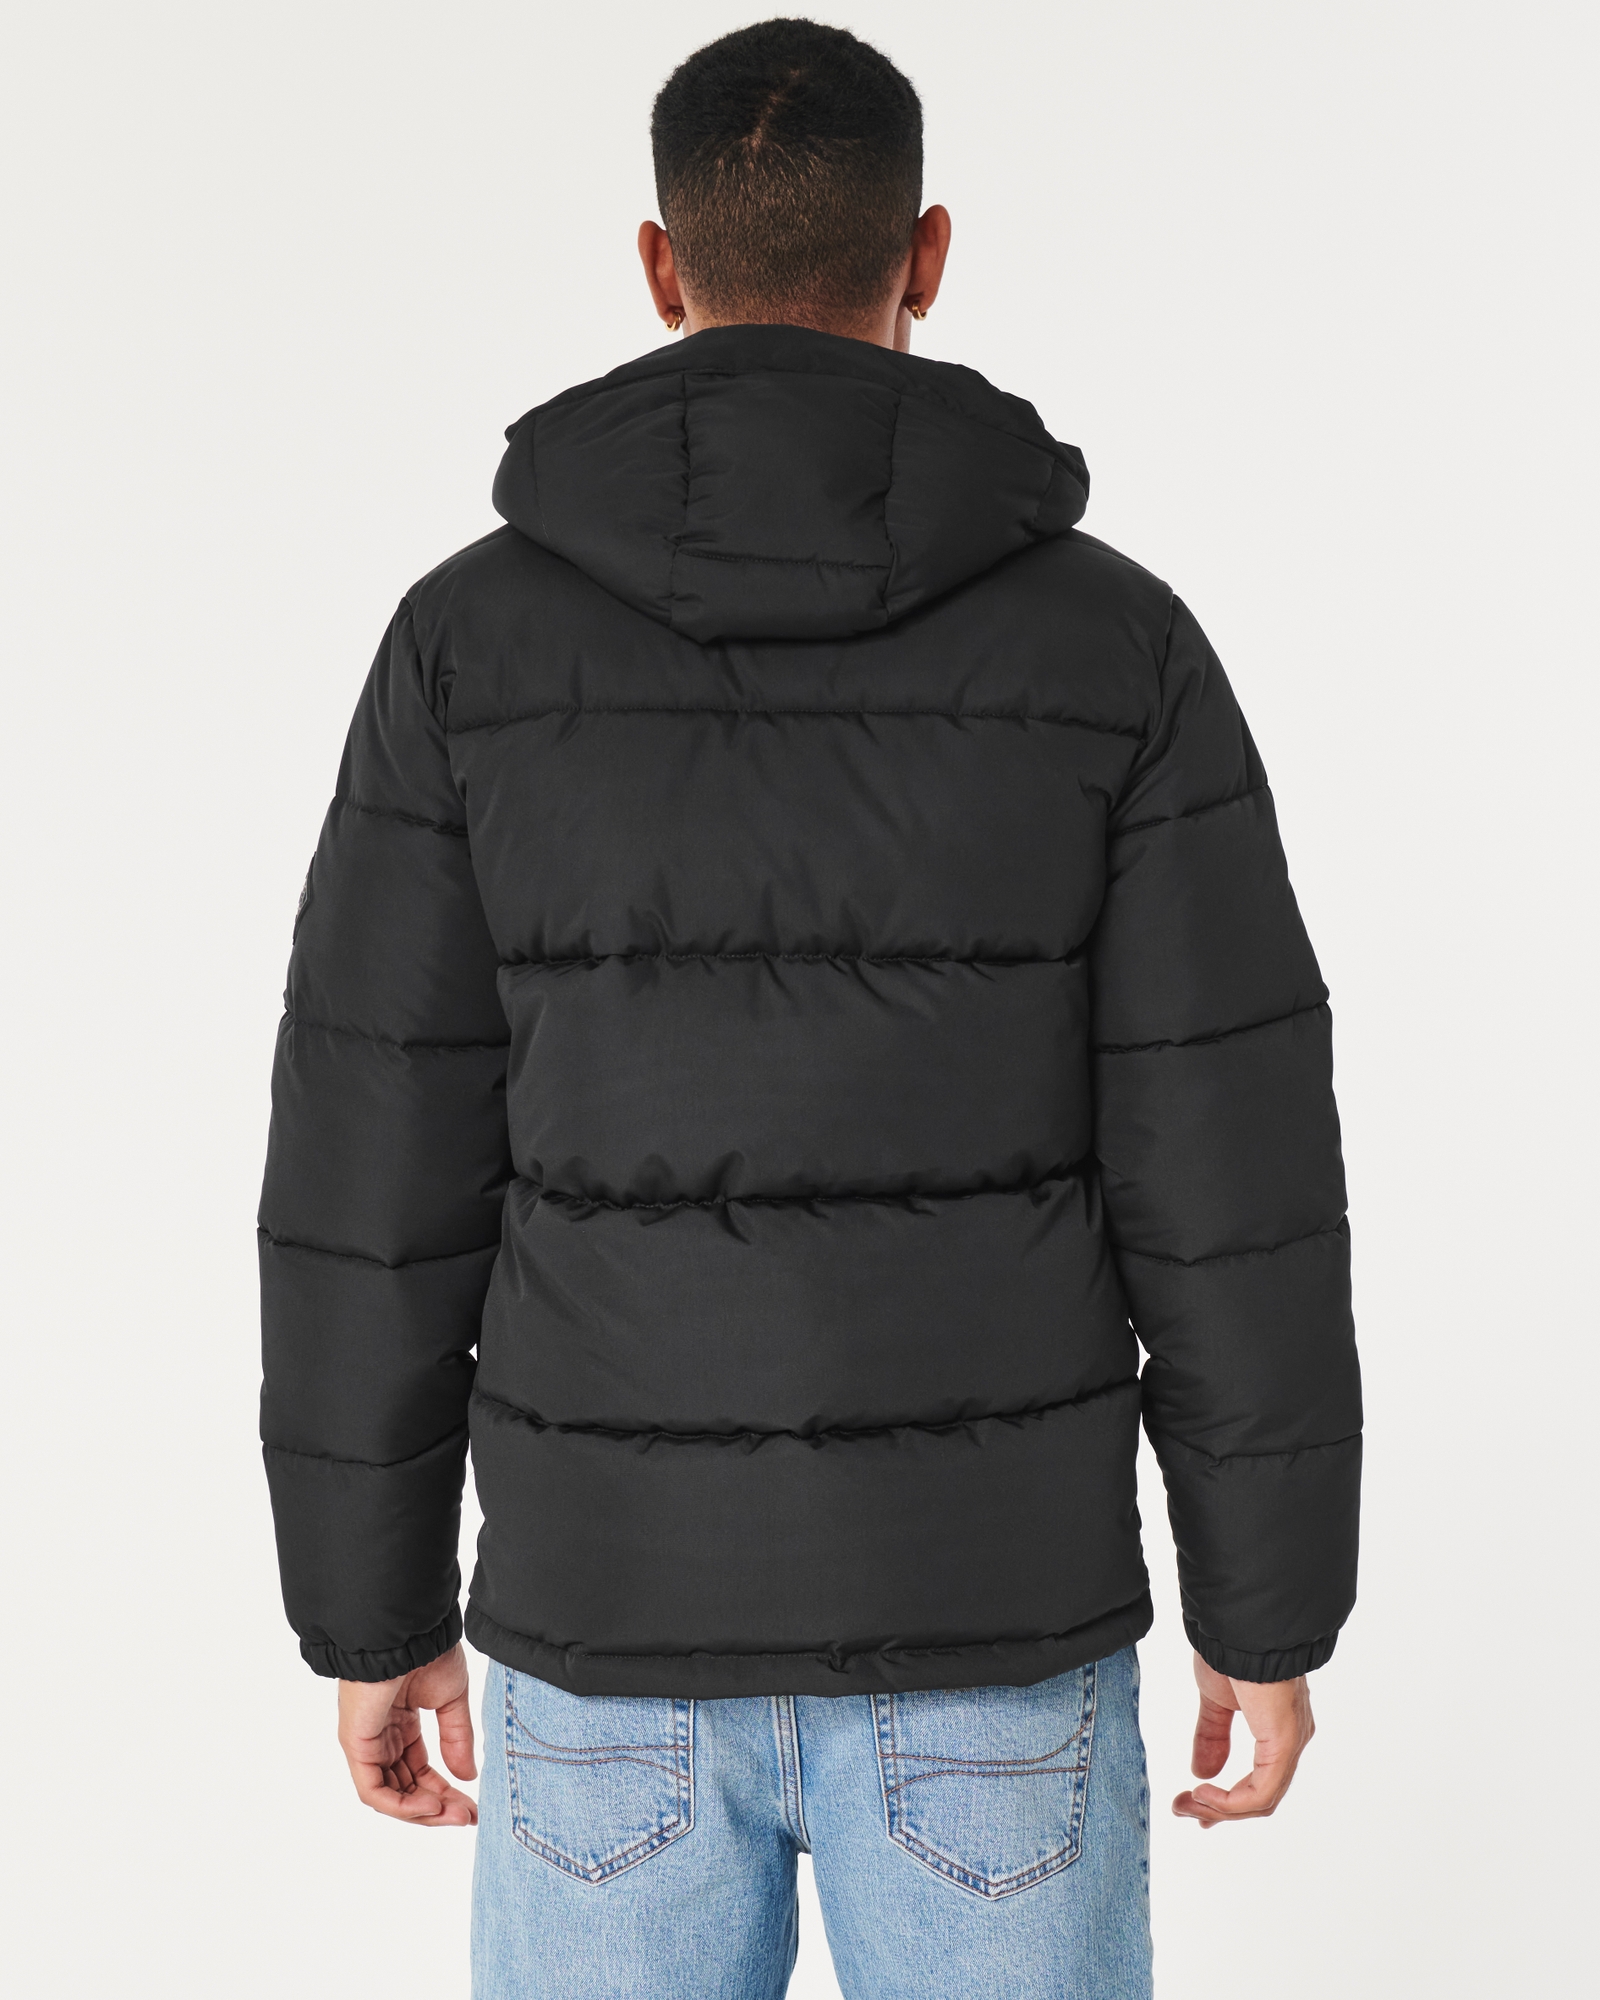 HOLLISTER Black Hooded Down Puffer Jacket Coat Size M